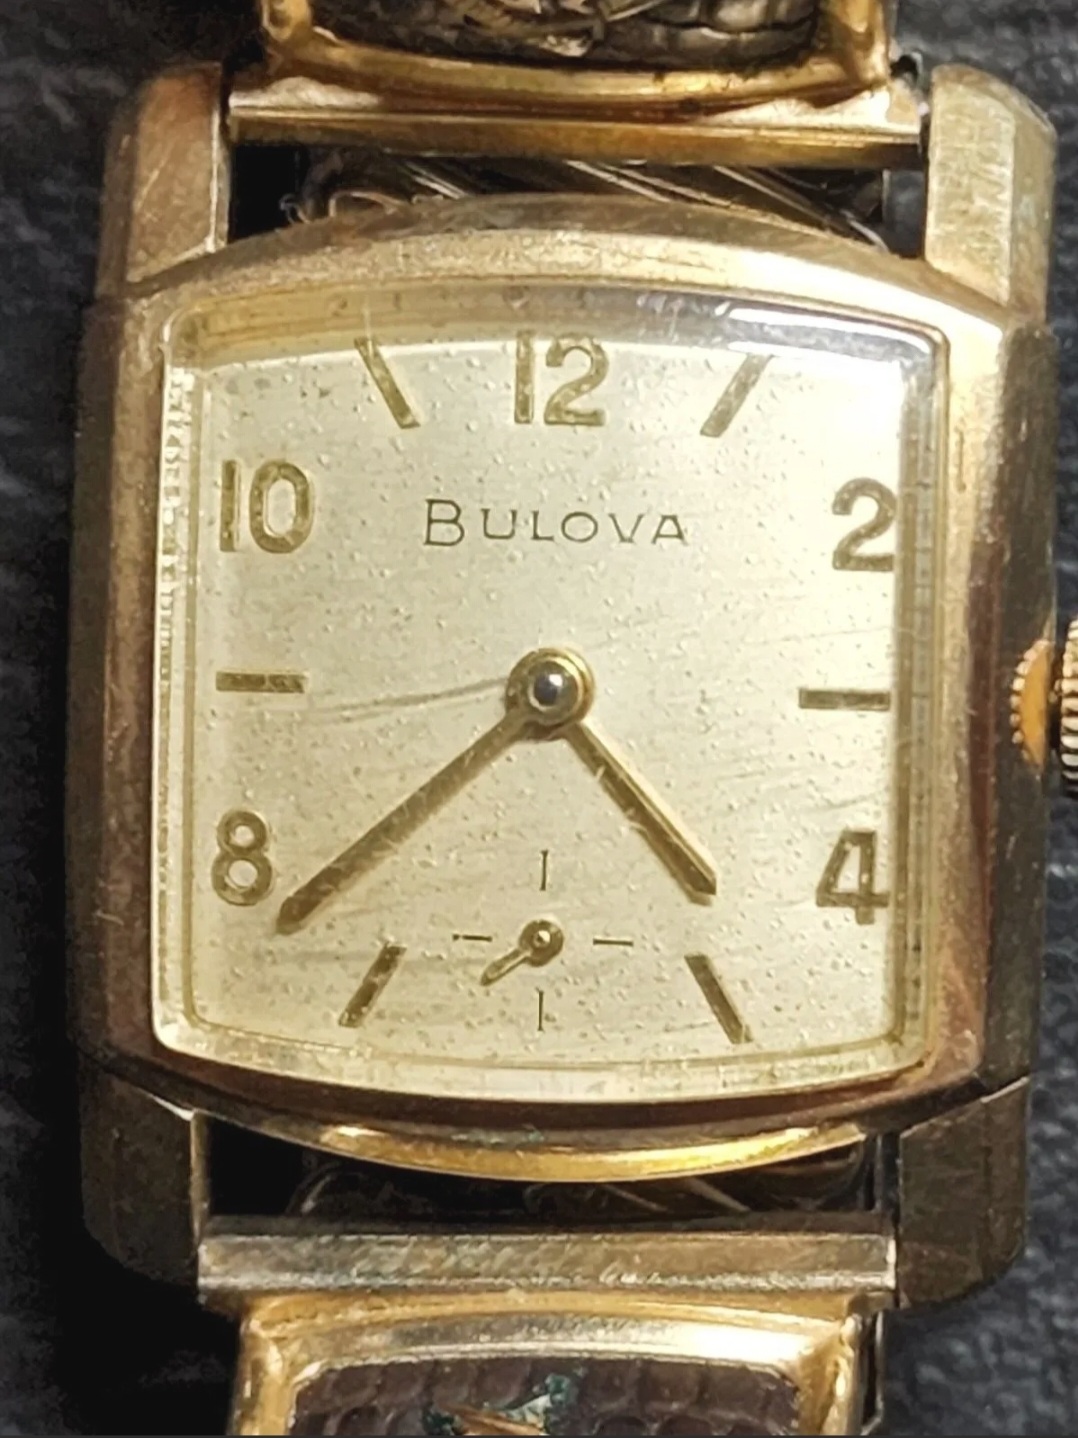 1959 Bulova Unk 2 Example